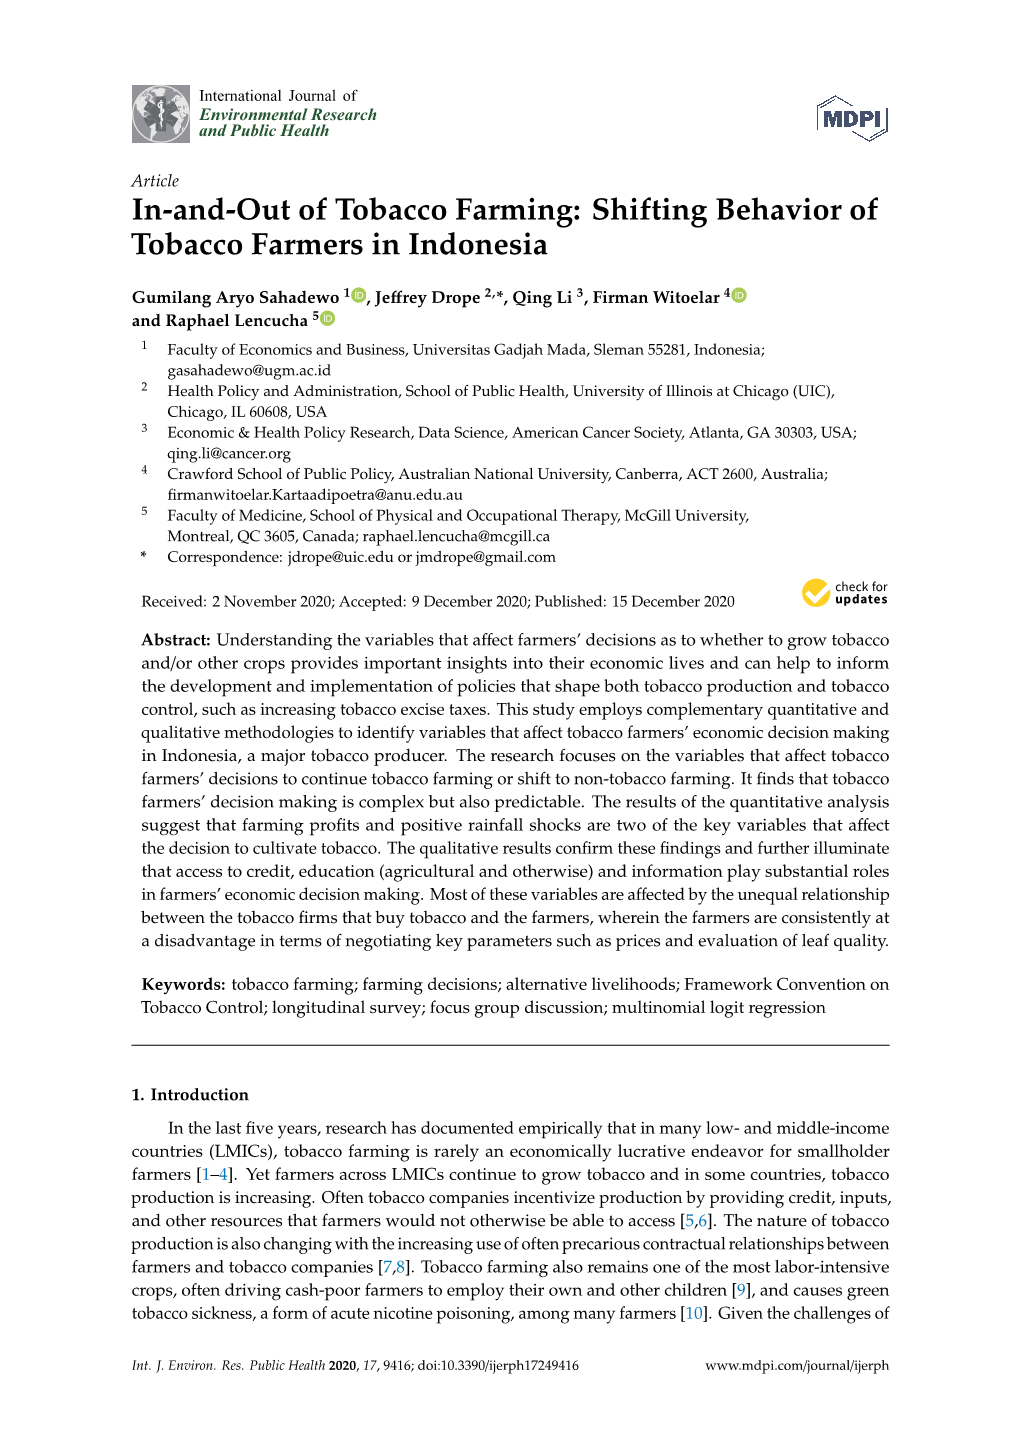 Shifting Behavior of Tobacco Farmers in Indonesia